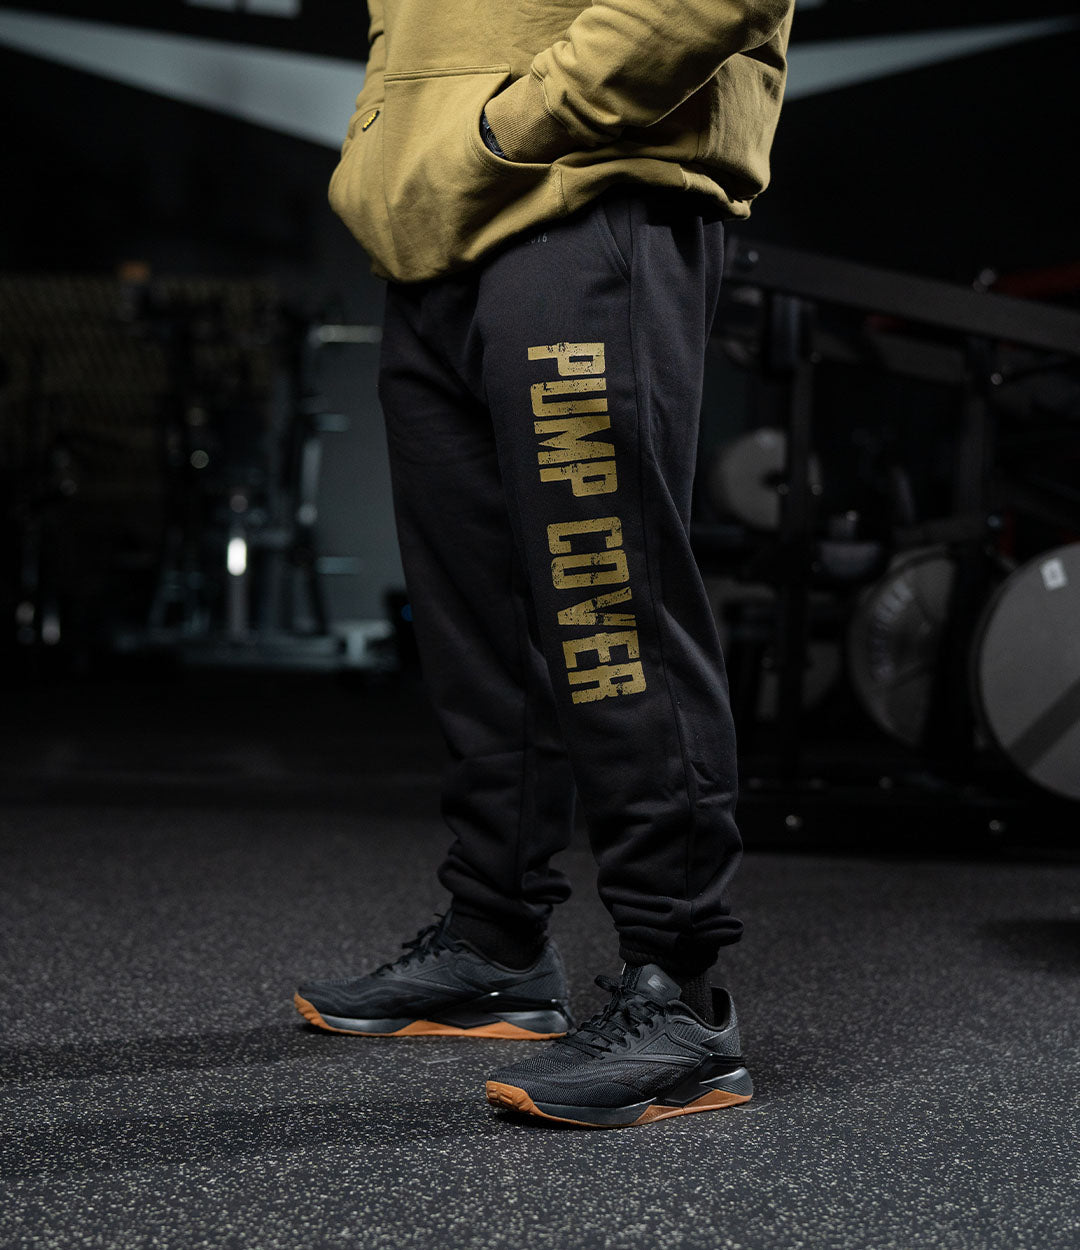 Nike Cleveland Cavaliers Men's Jogger Sweatpants Gray/Black at  Men’s  Clothing store